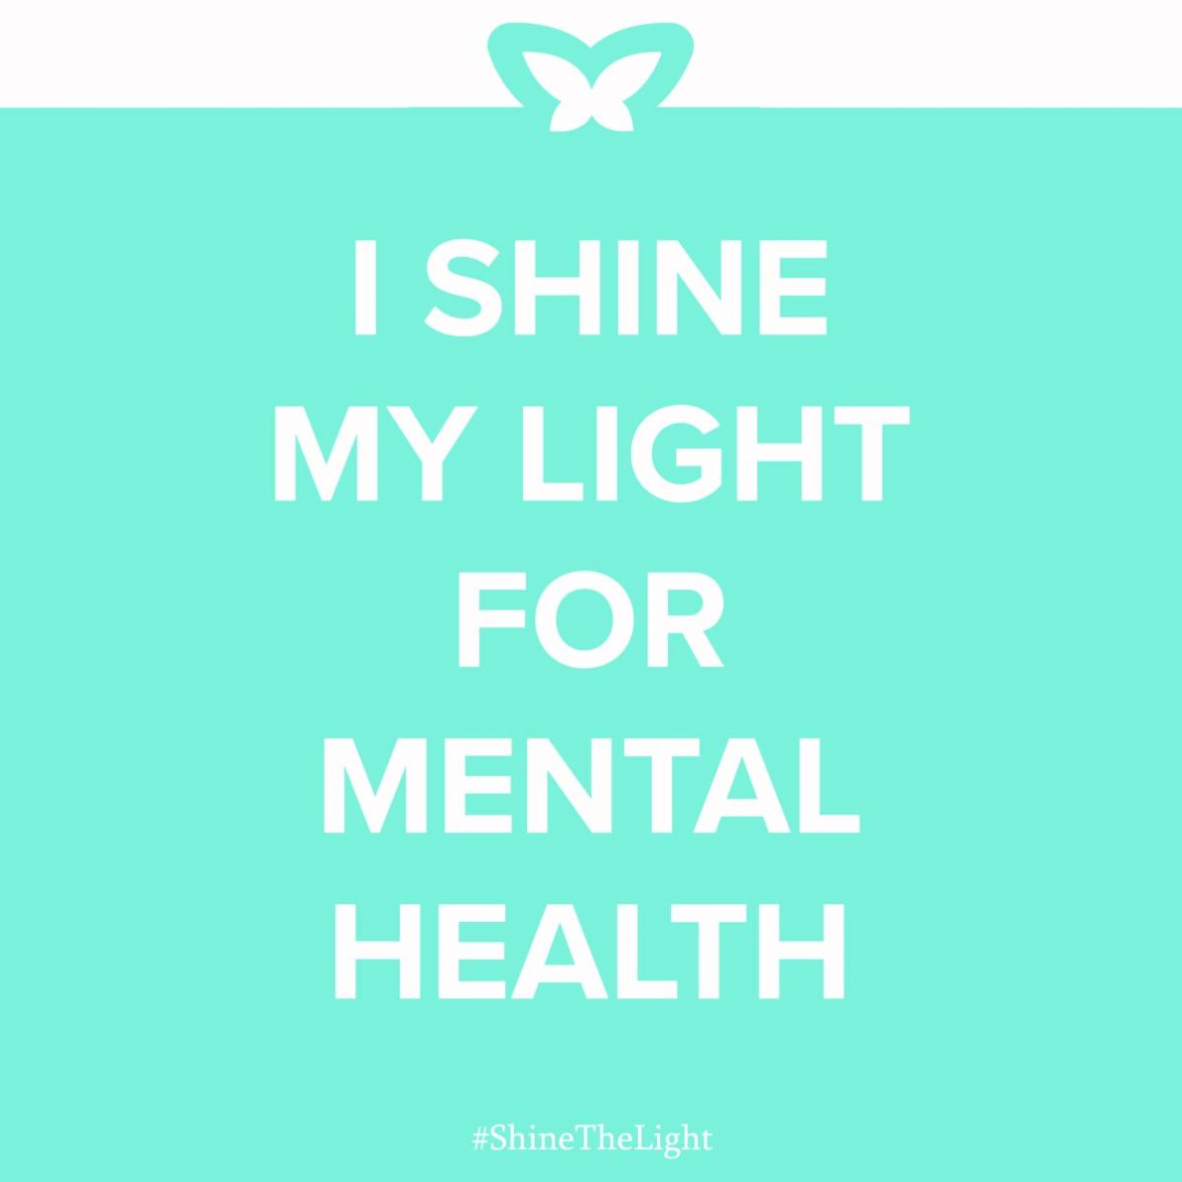 I shine my light for mental health